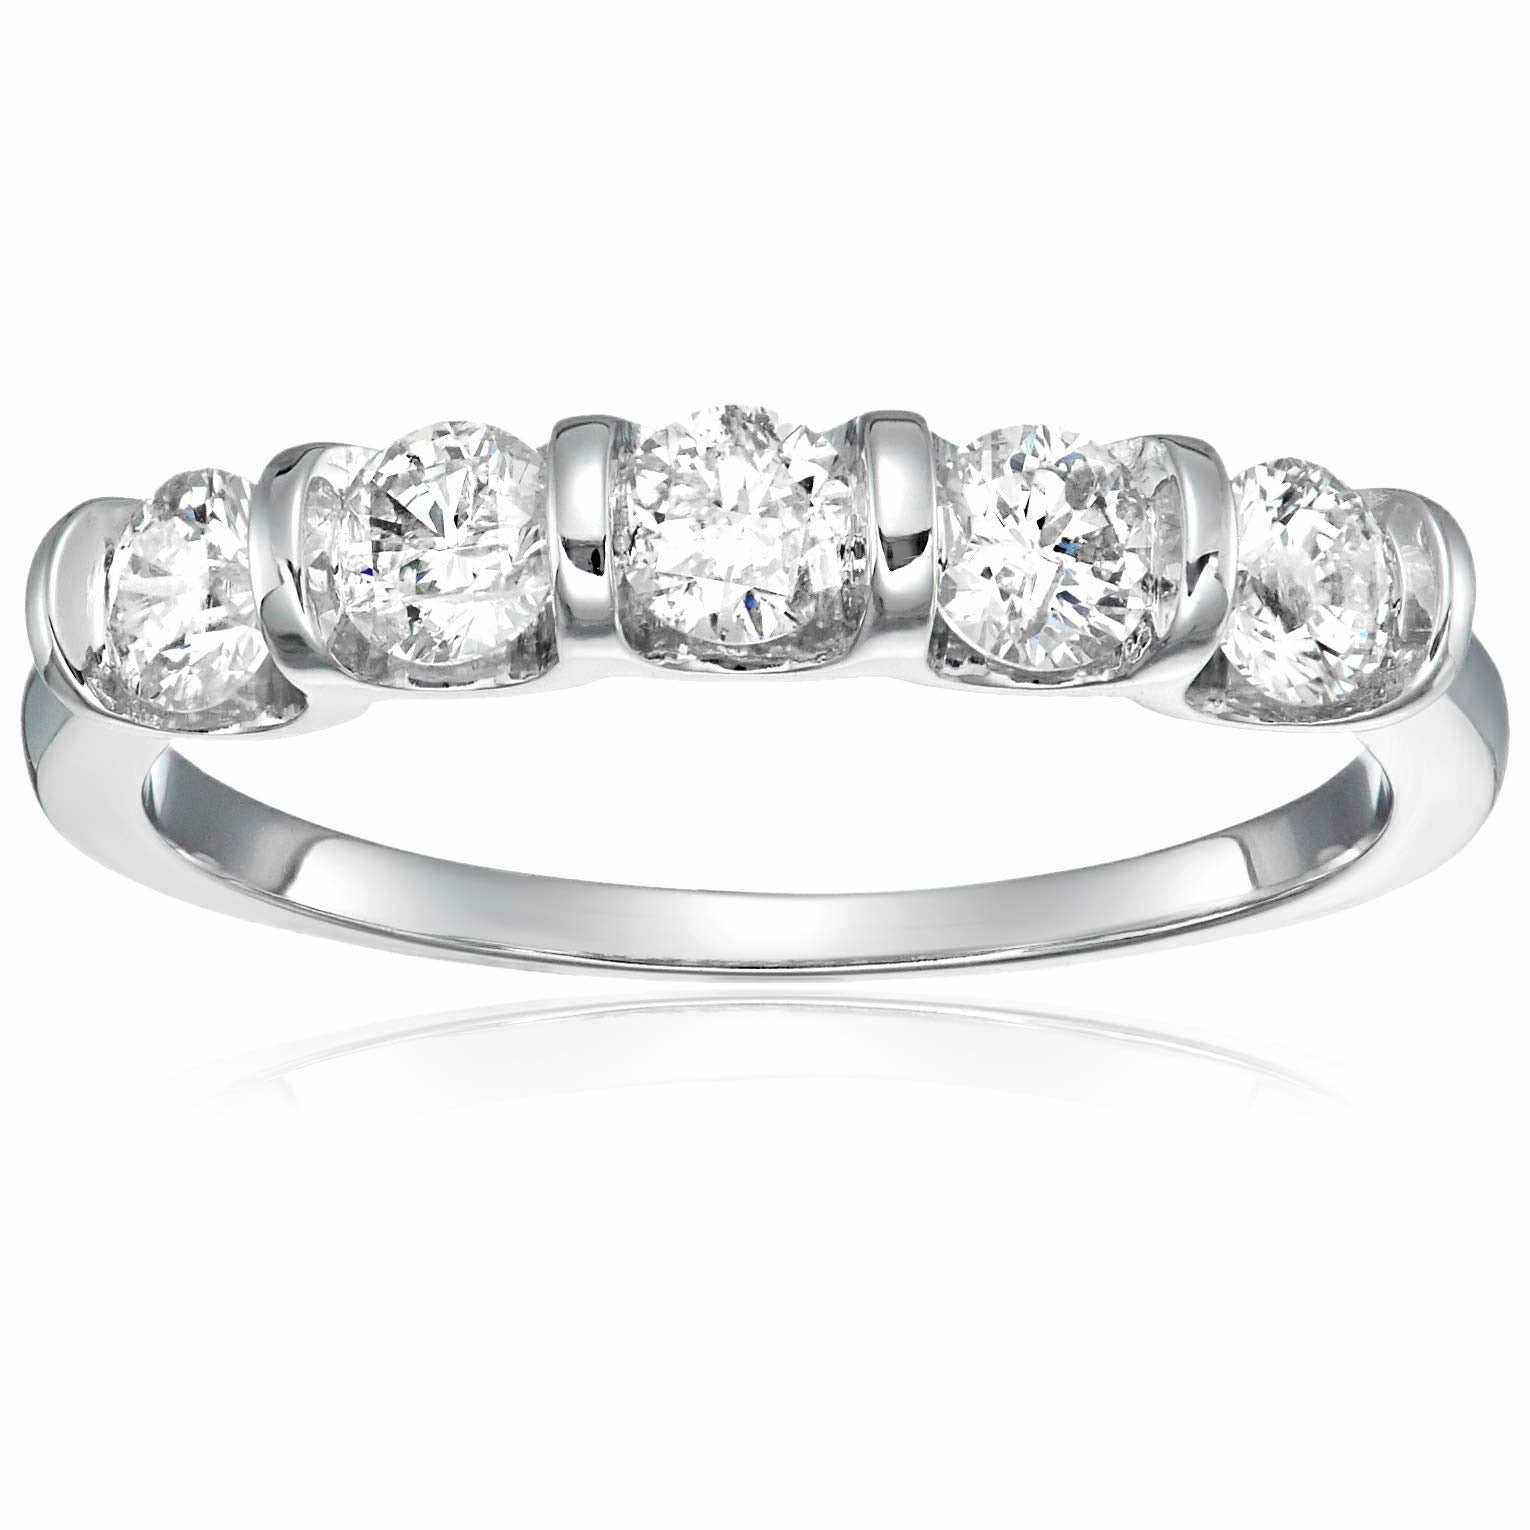 1 cttw 5 Stone Diamond Ring 14K White Gold Engagement Channel Set